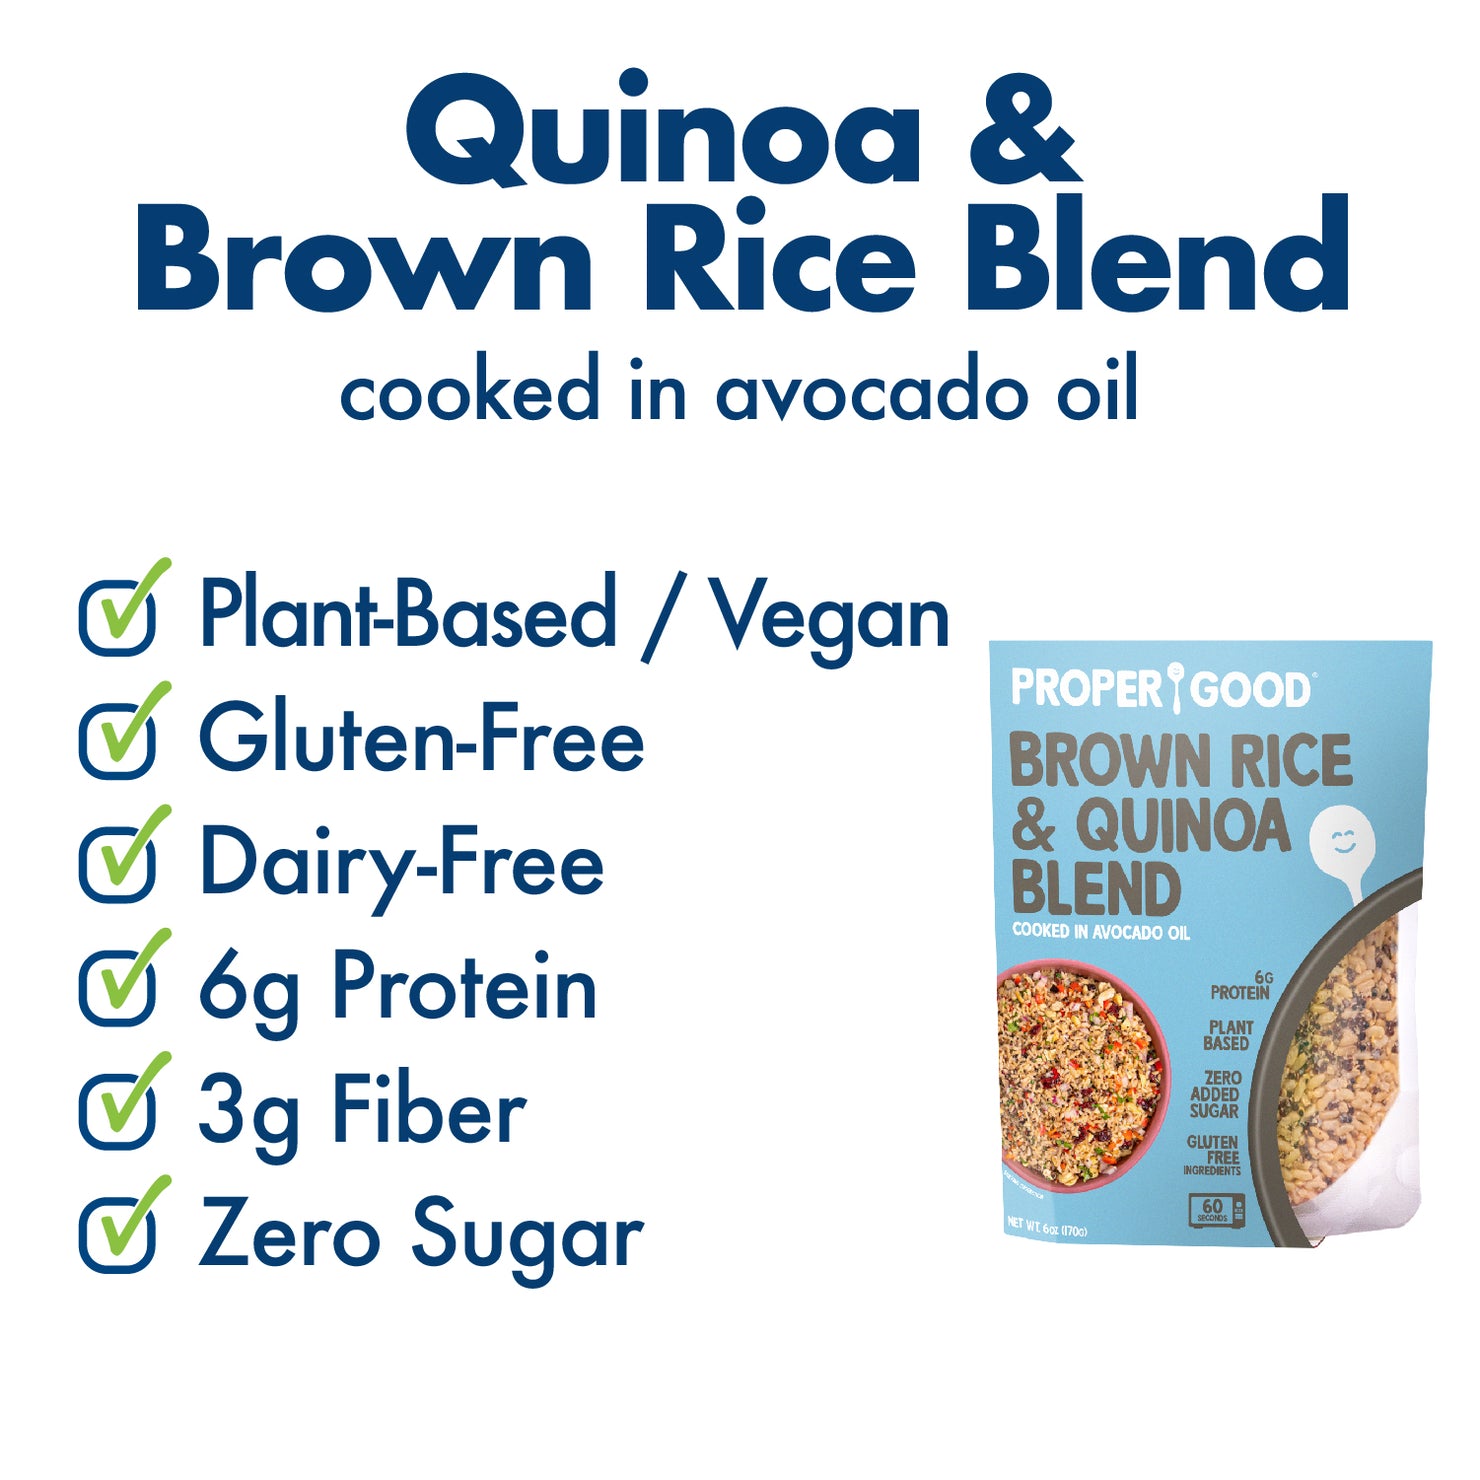 Quinoa & Brown Rice Blend Benefits - Eat Proper Good